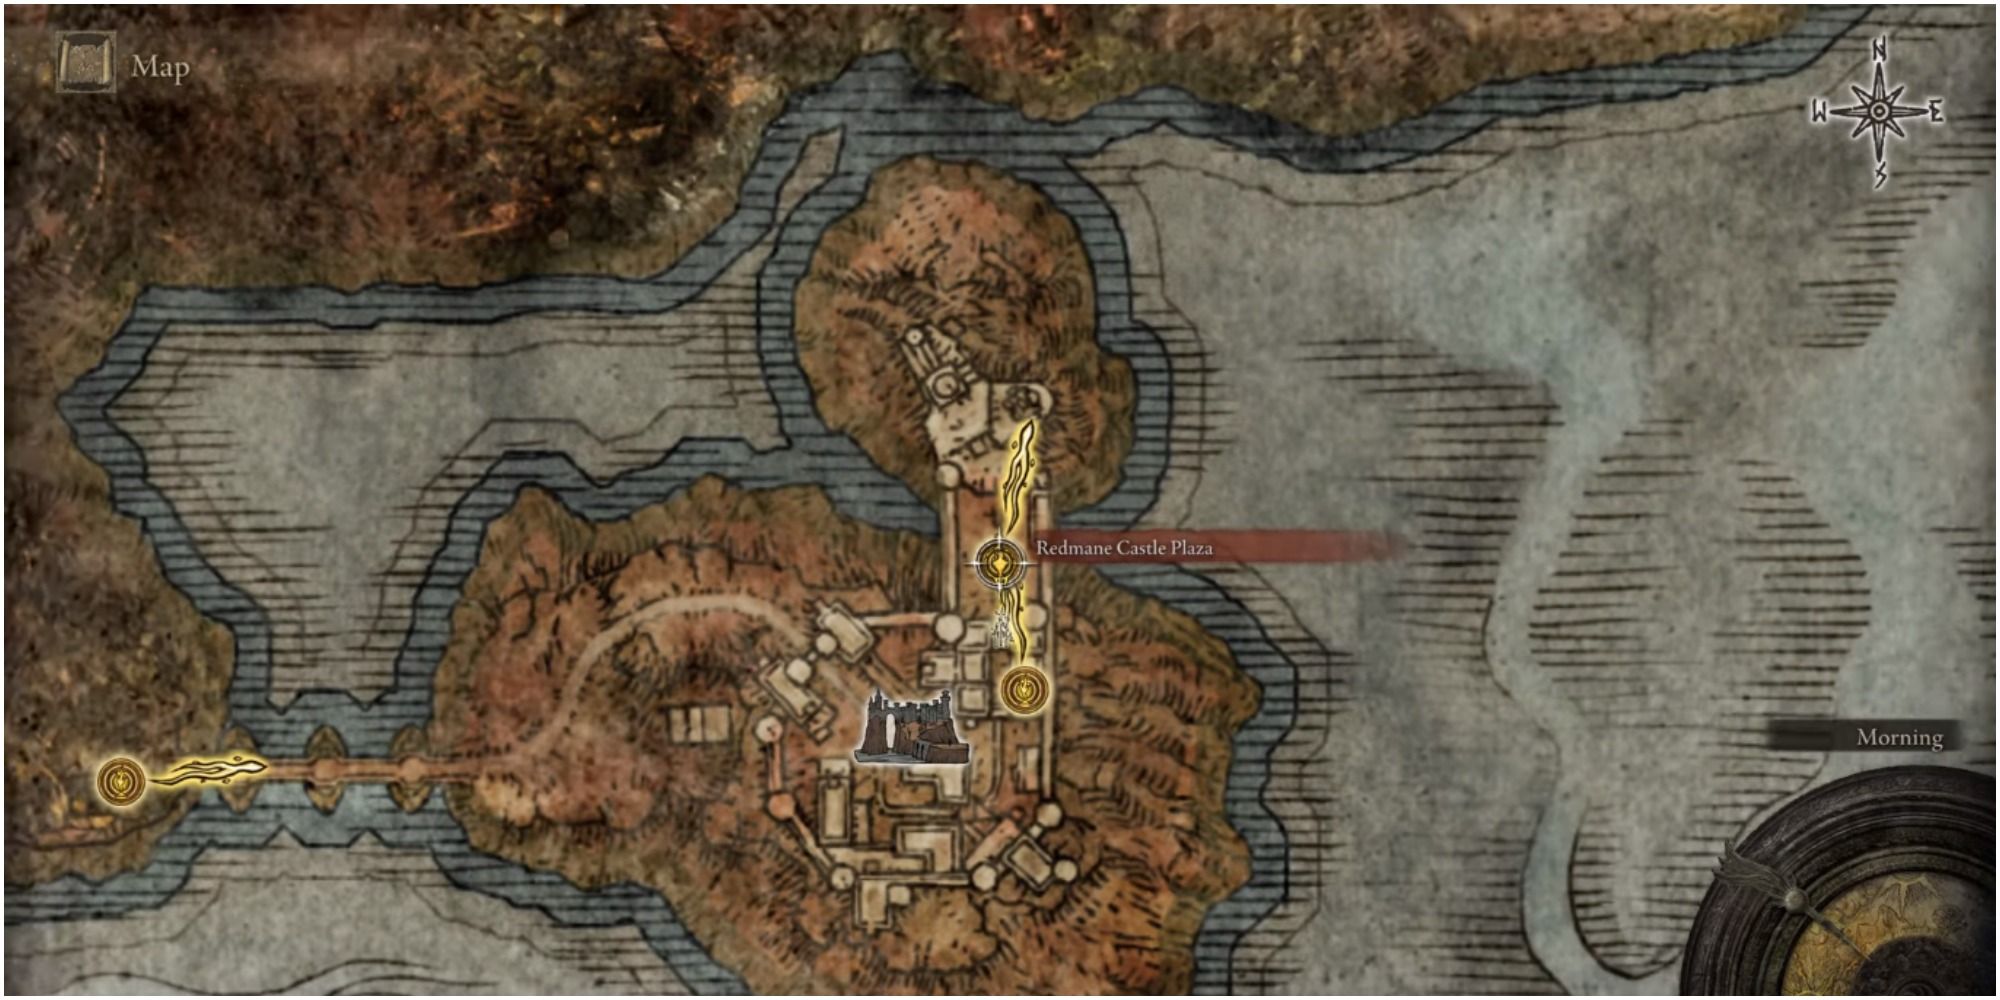 The map showing Redmane Castle.